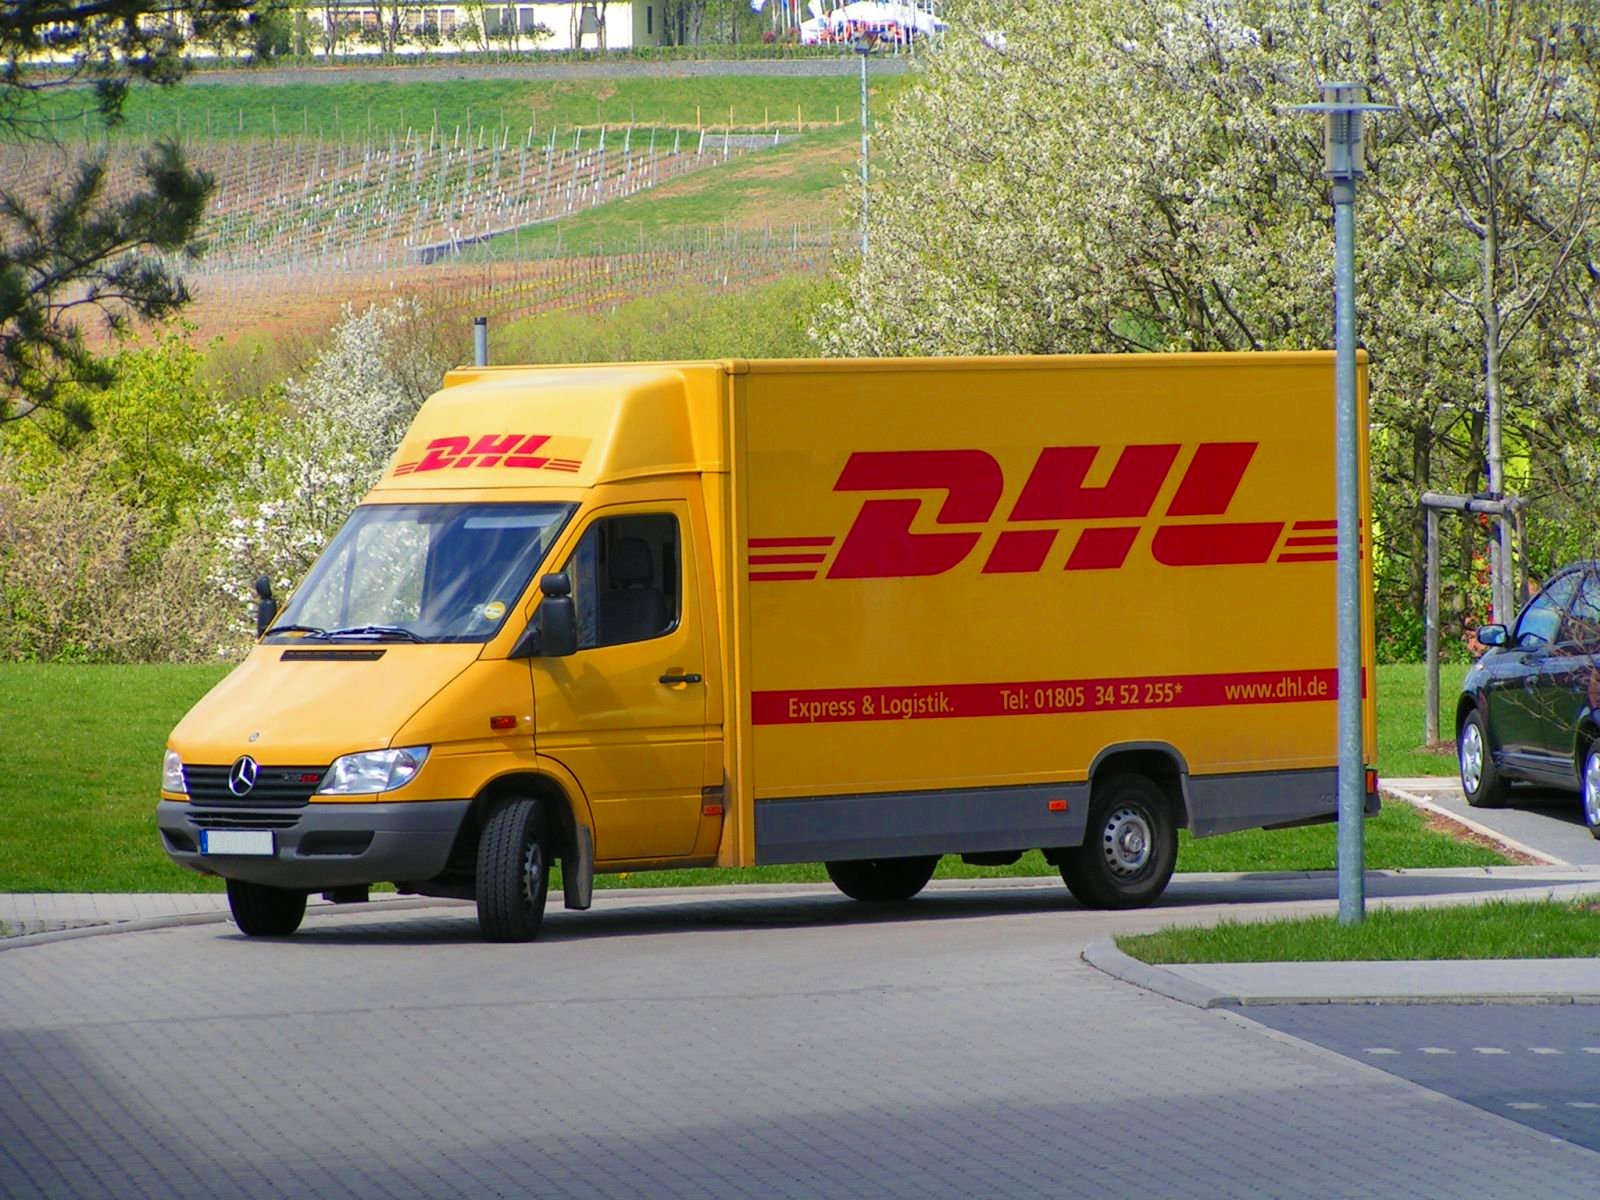 Dhl алматы. DHL. Компания DHL. DHL транспорт. Машина ДЧЛ.